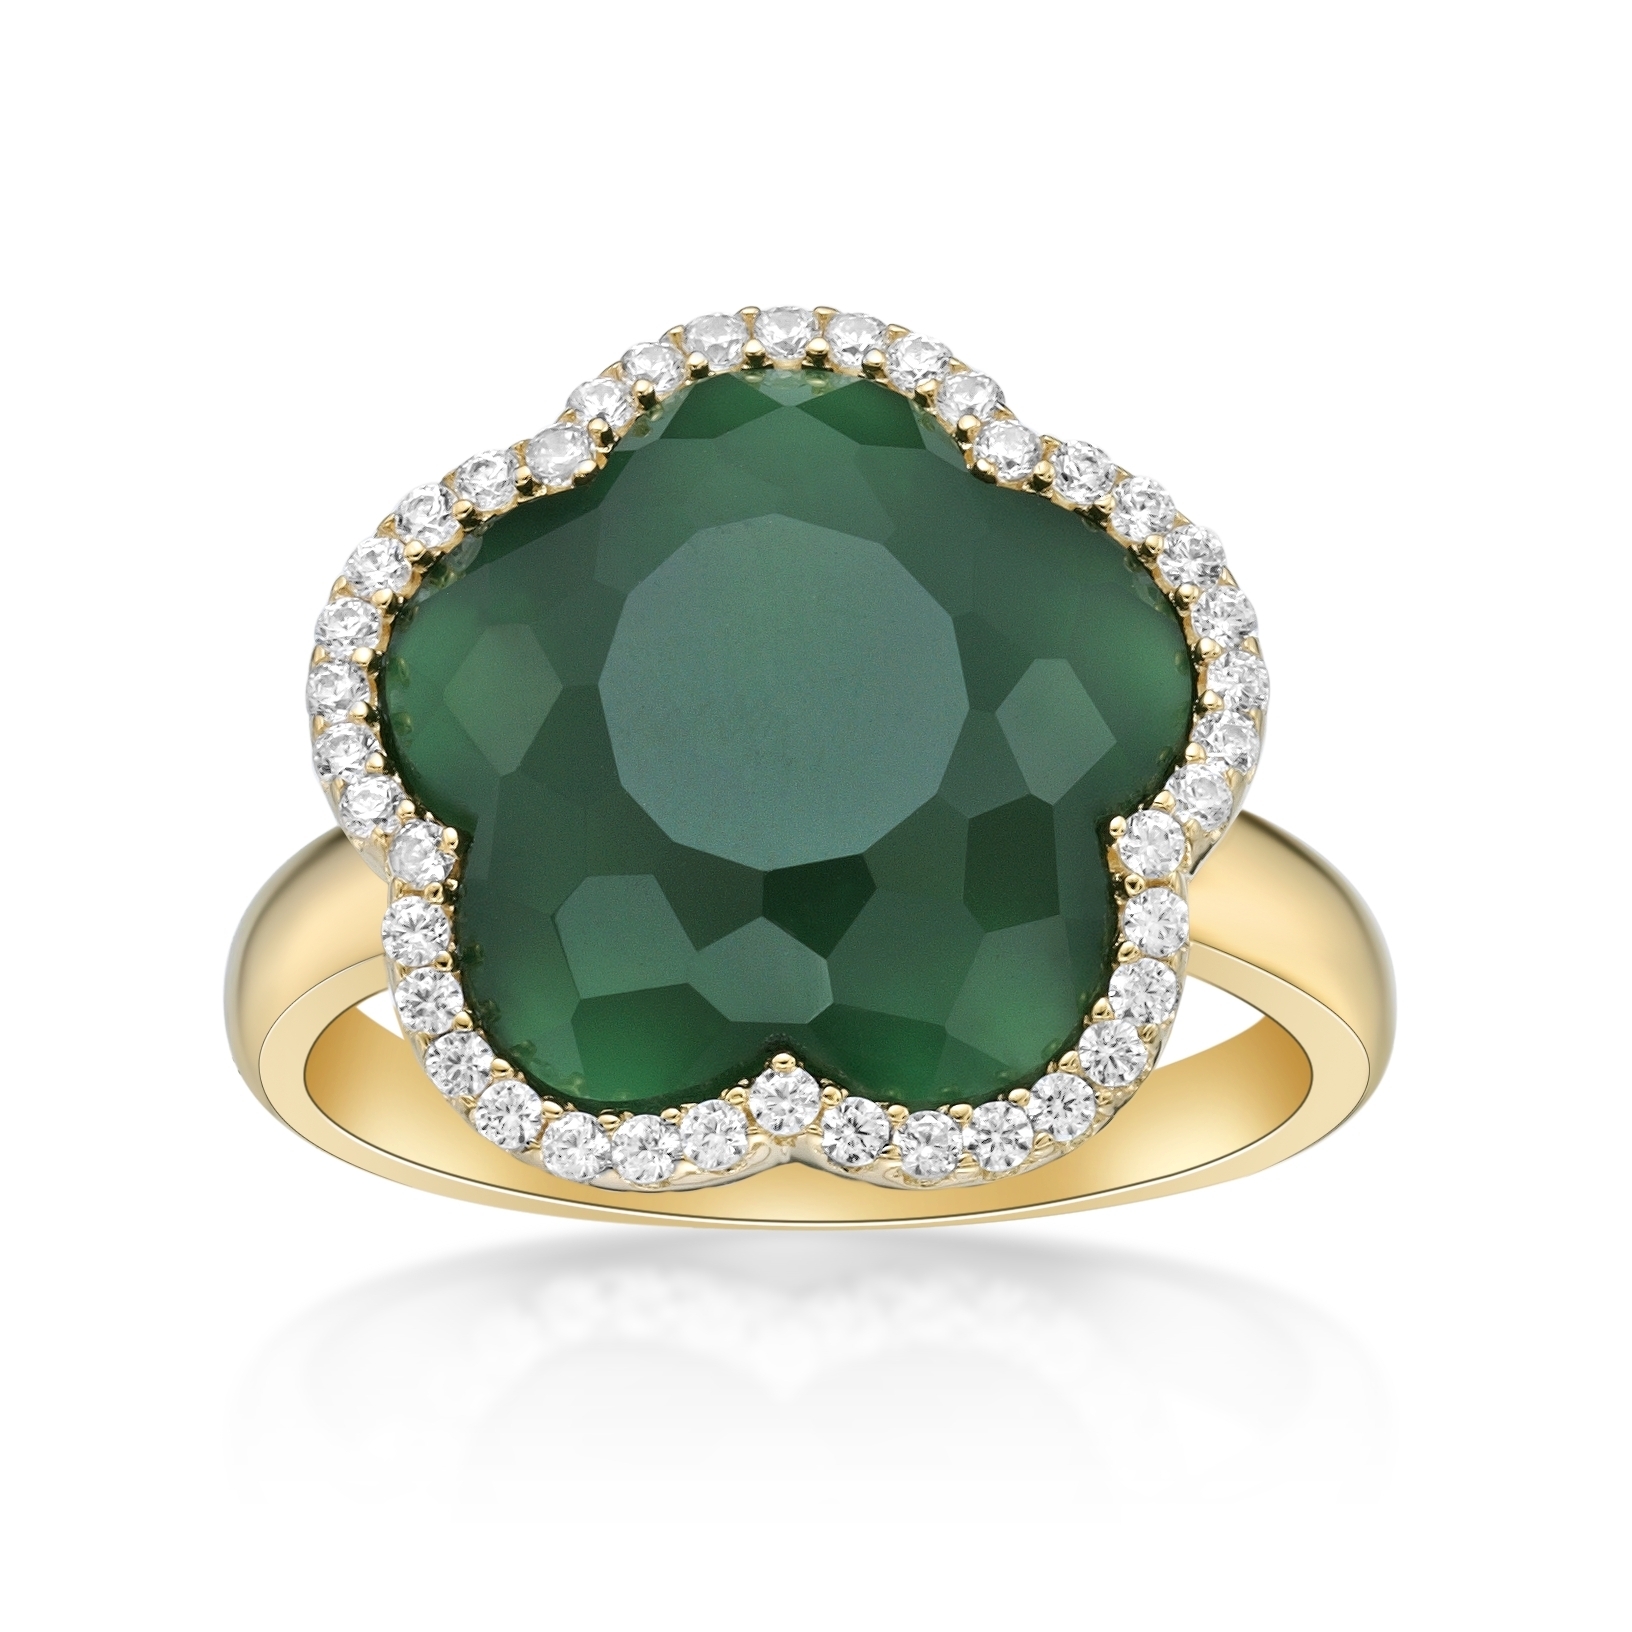 Lavari Jewelers Women’s Green Onyx Five Petal Flower Ring, 925 Sterling Silver, Size 7